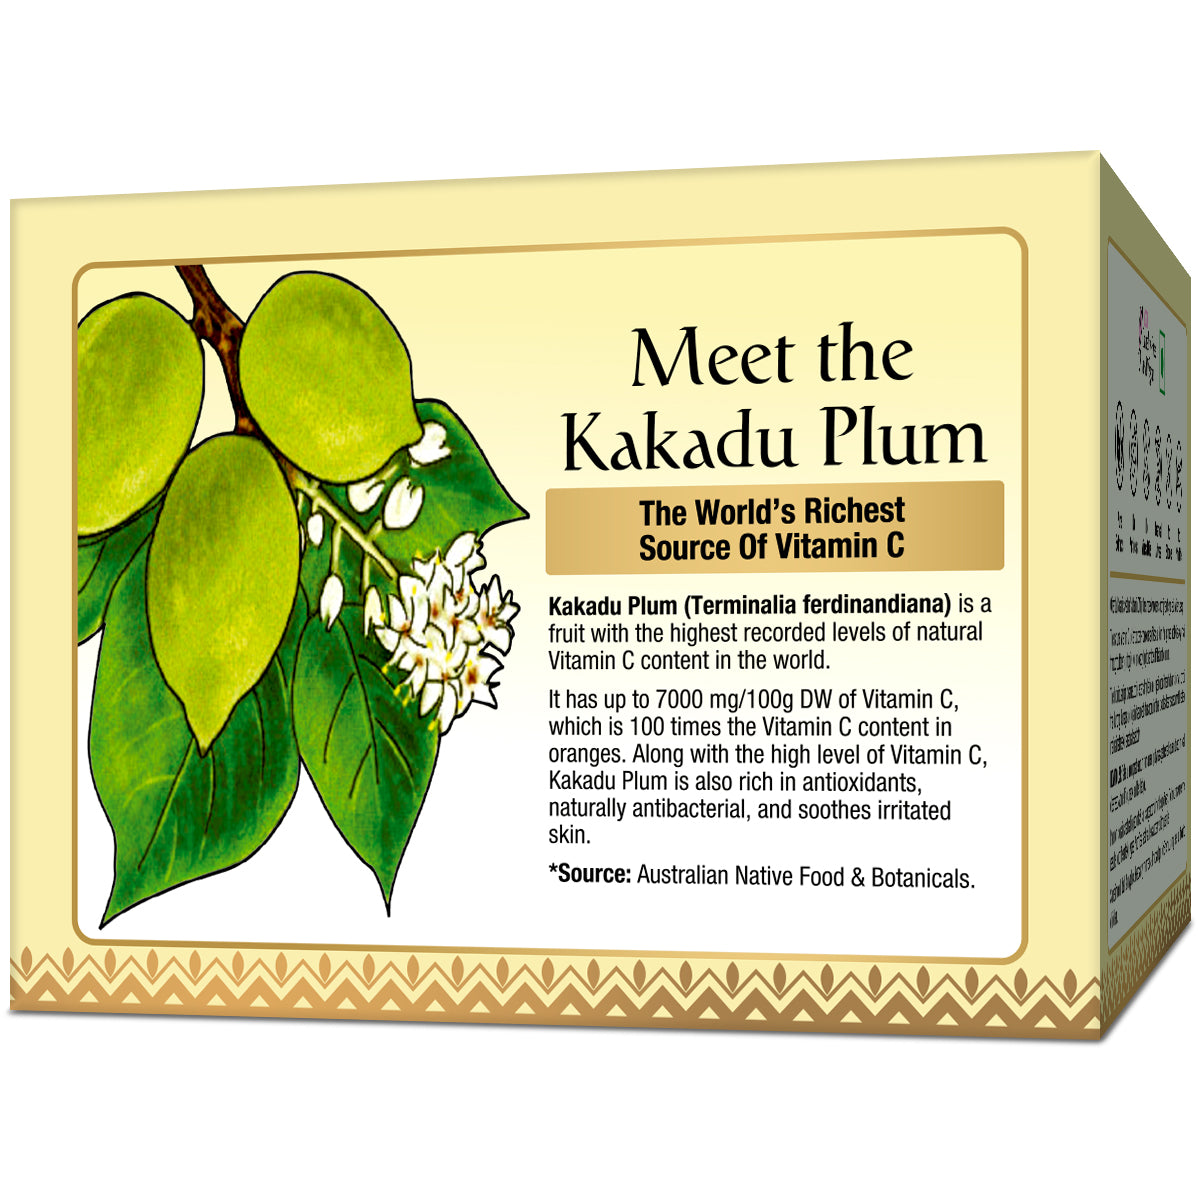 Oriental Botanics Nature's Vitamin C Brightening Face Night Cream - With Kakadu Plum - For Revitalized and Glowing Skin, 50 g